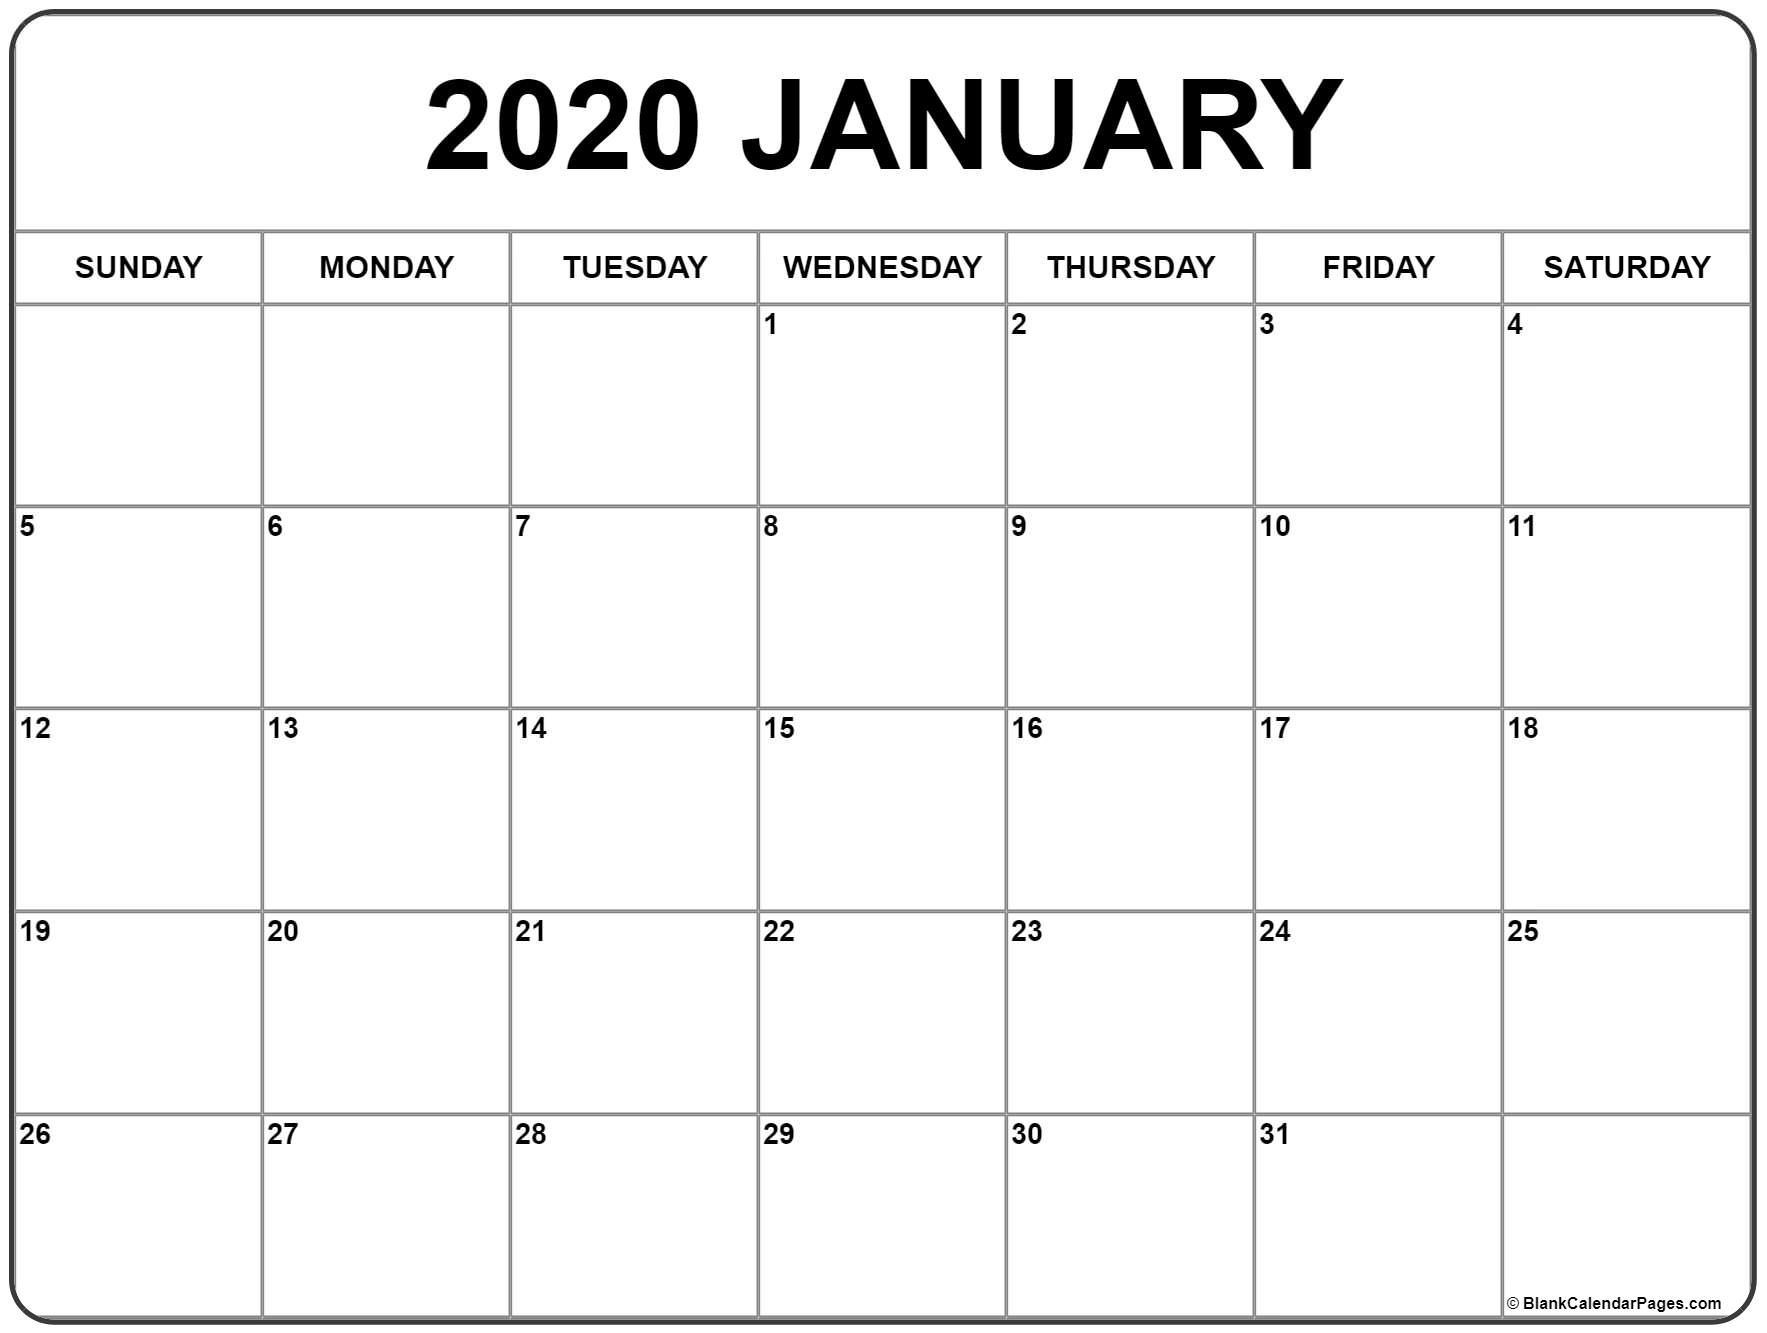 January 2020 Calendar | Free Printable Monthly Calendars-January 2020 Calendar Ireland